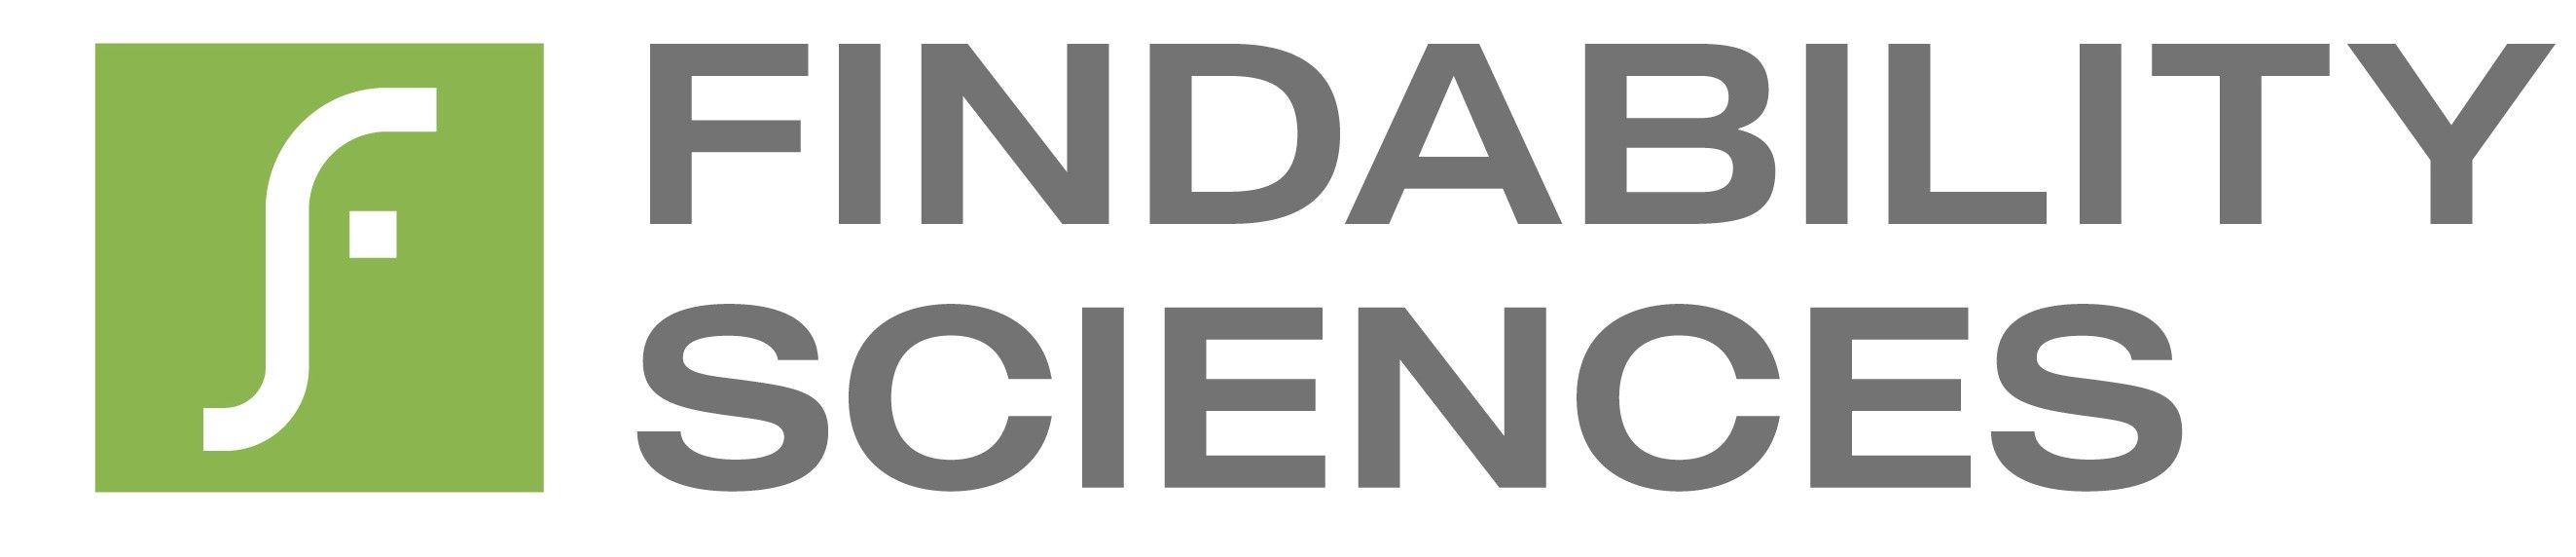 Findability Sciences Logo